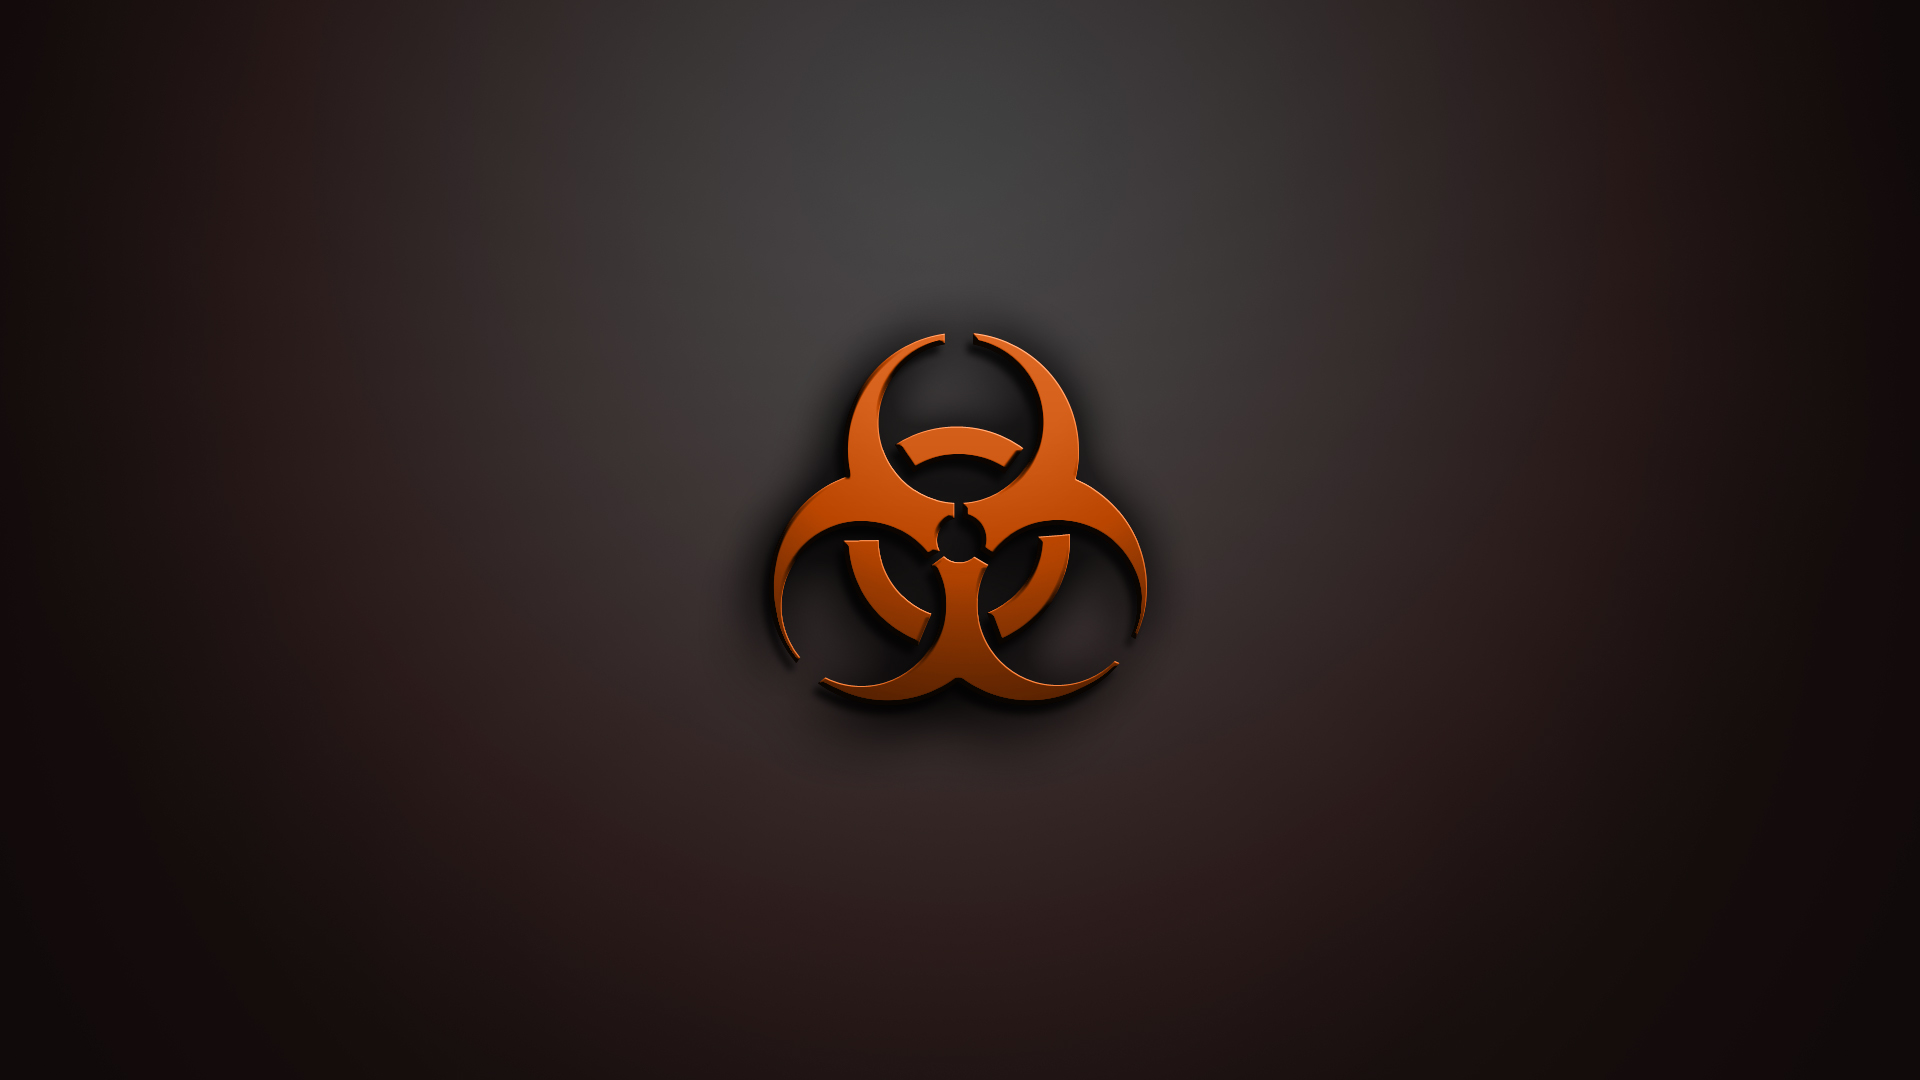 Zombie Biohazard Symbol Wallpaper Galleryhip The